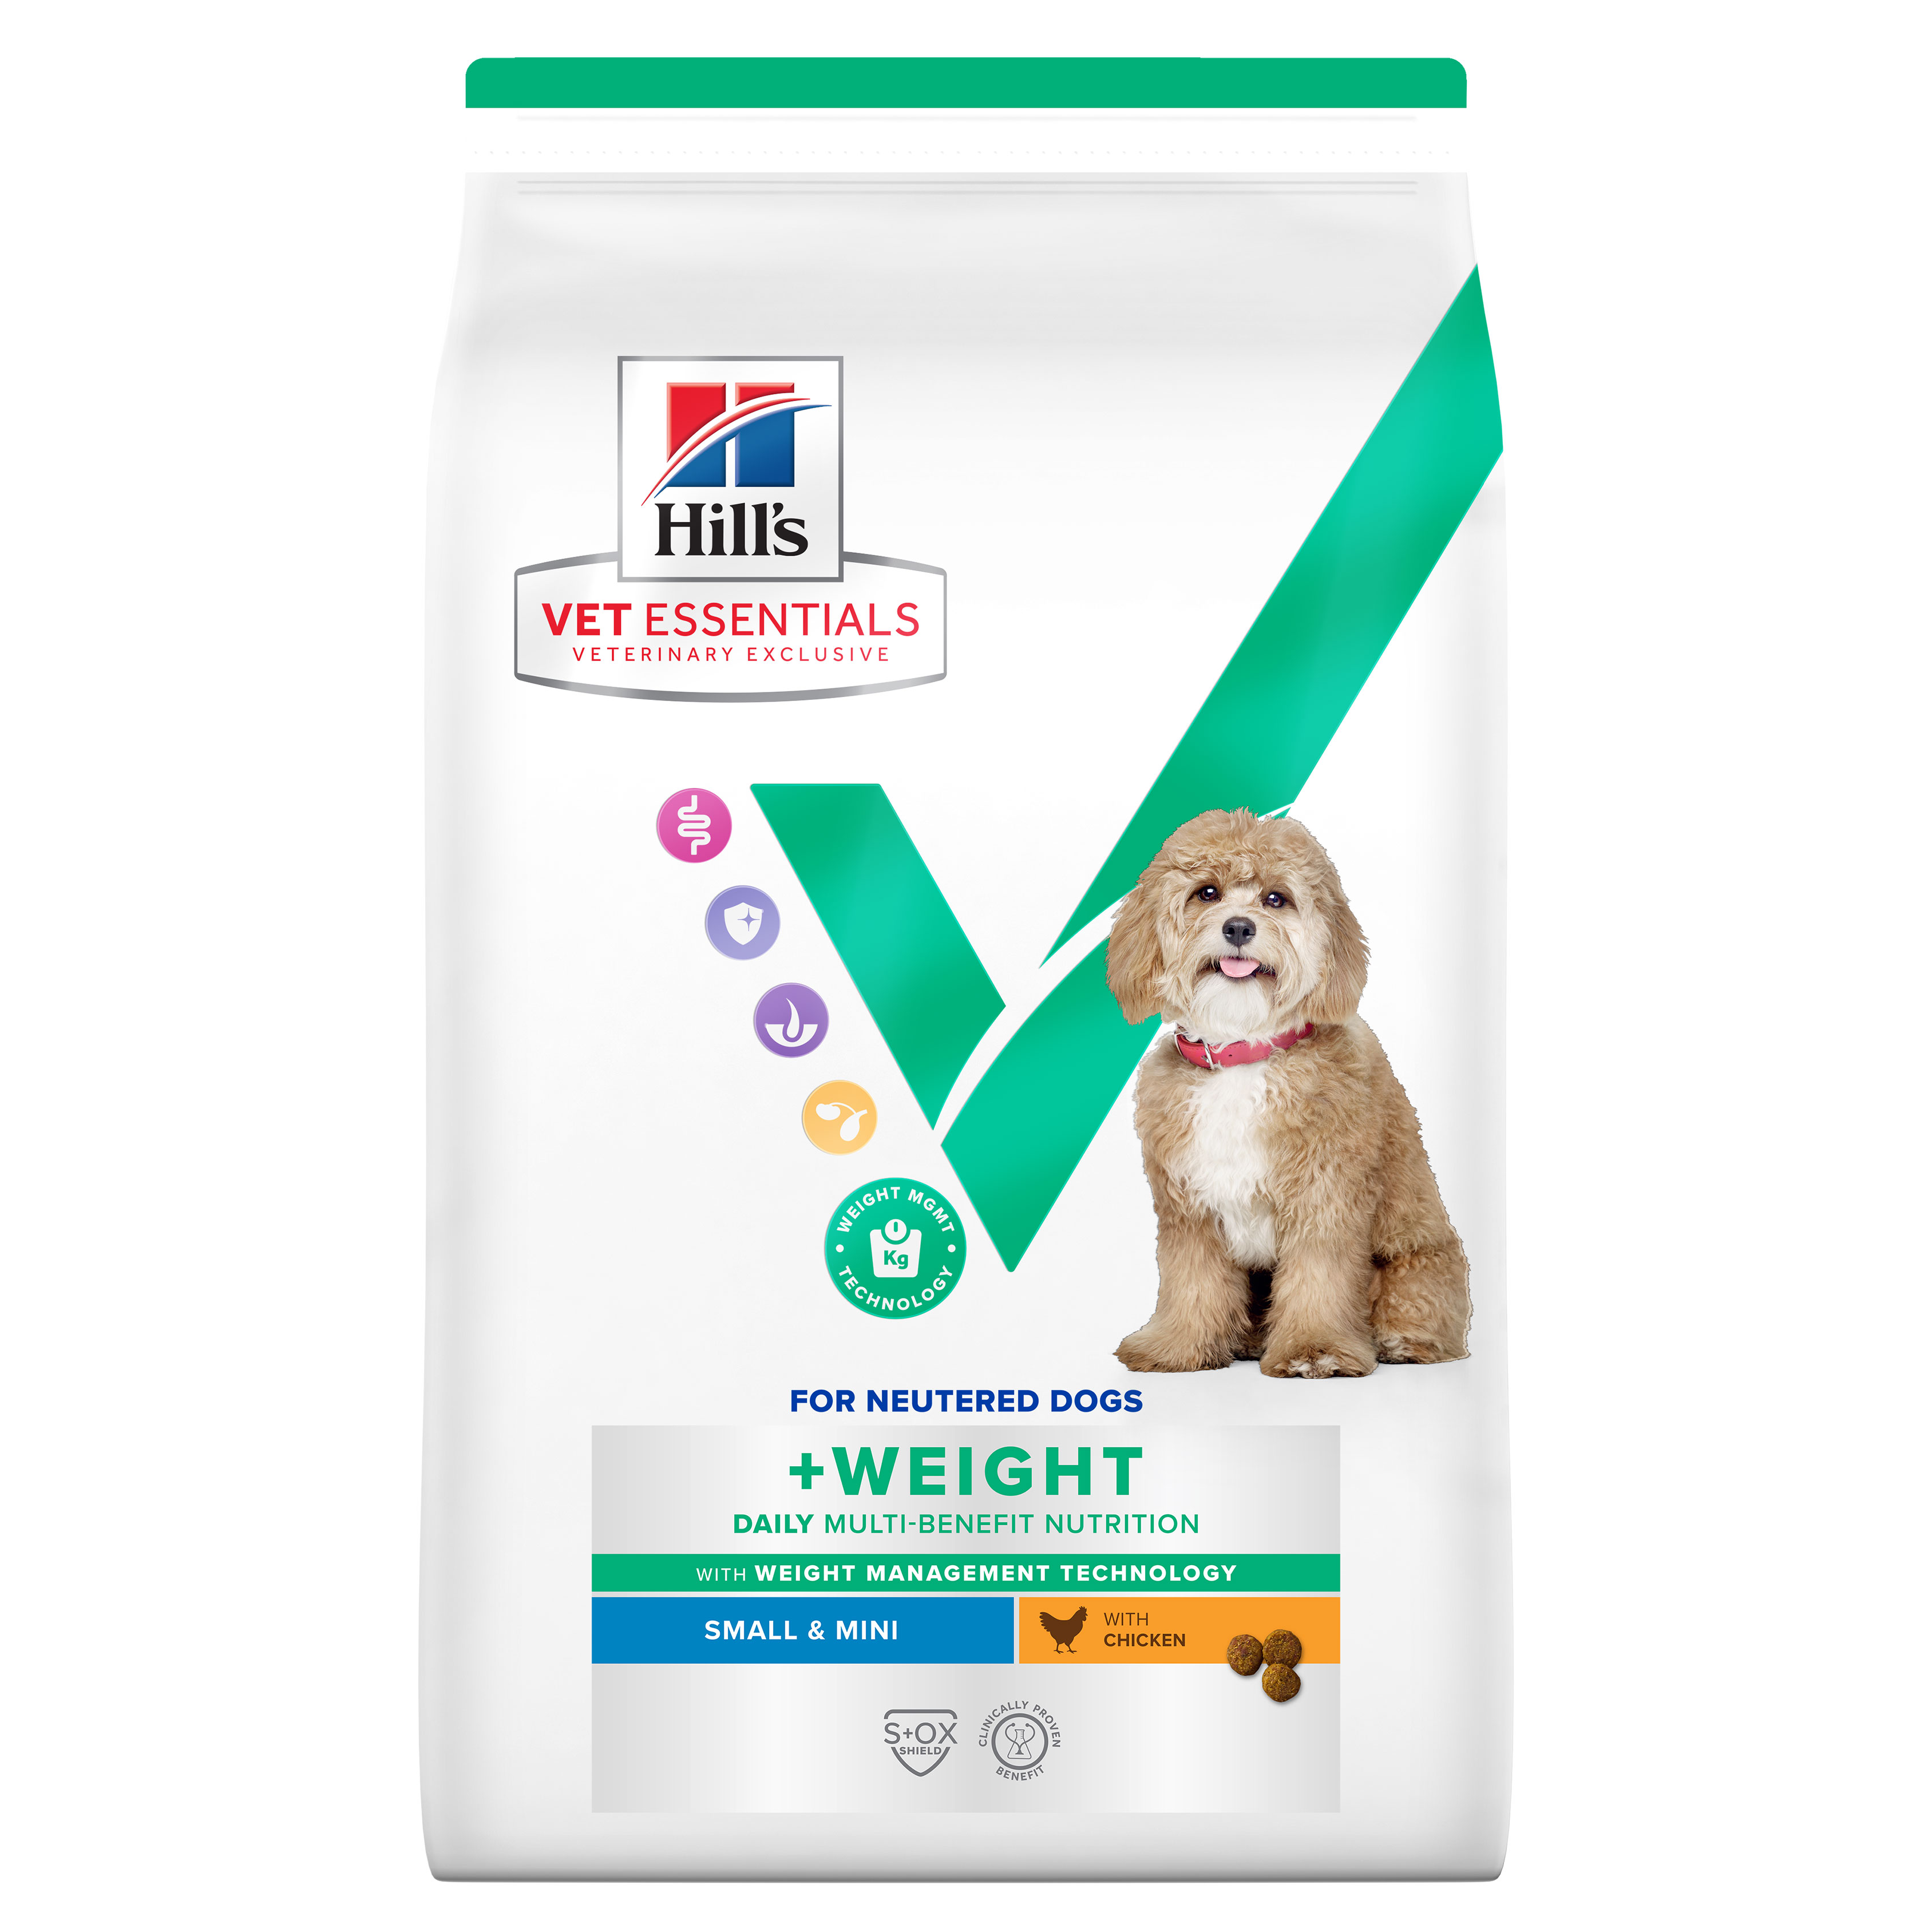 Hill's Vet Essentials מולטי בנפיט כלב בוגר ג.קטן ומיניאטורי,שמירה על המשקל,6 ק"ג